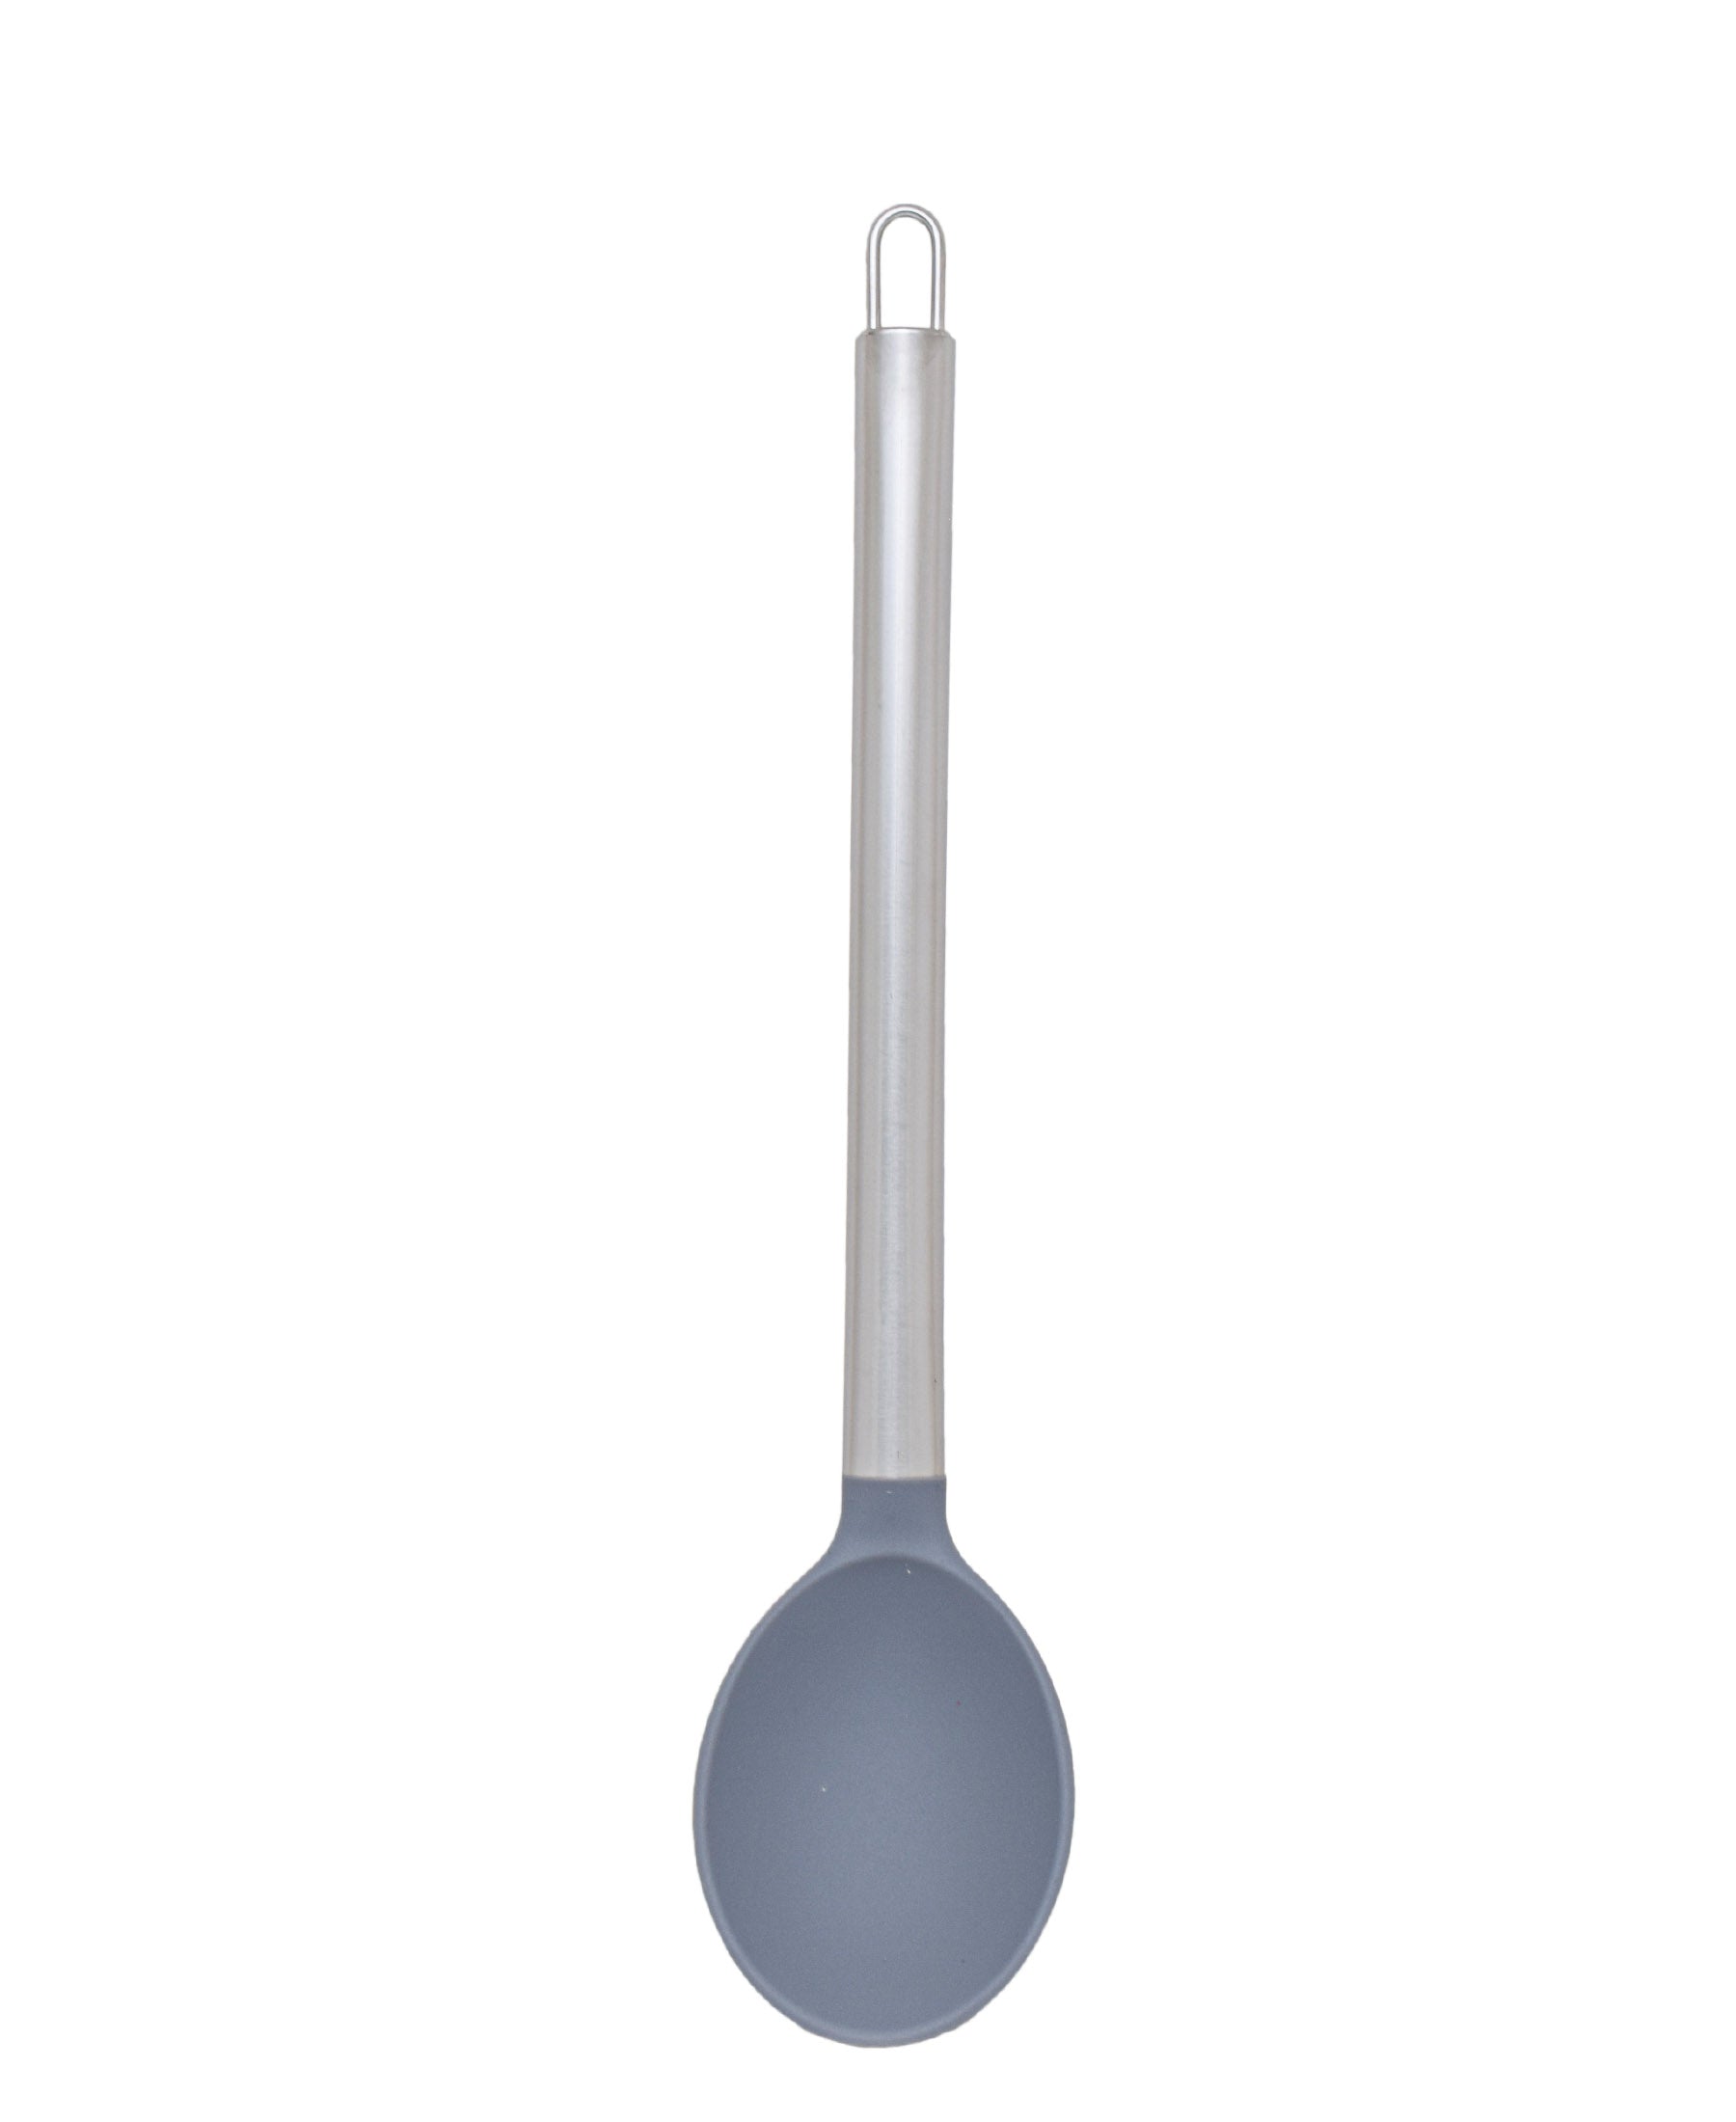 Table Pride Stainless Steel Solid Spoon - Grey